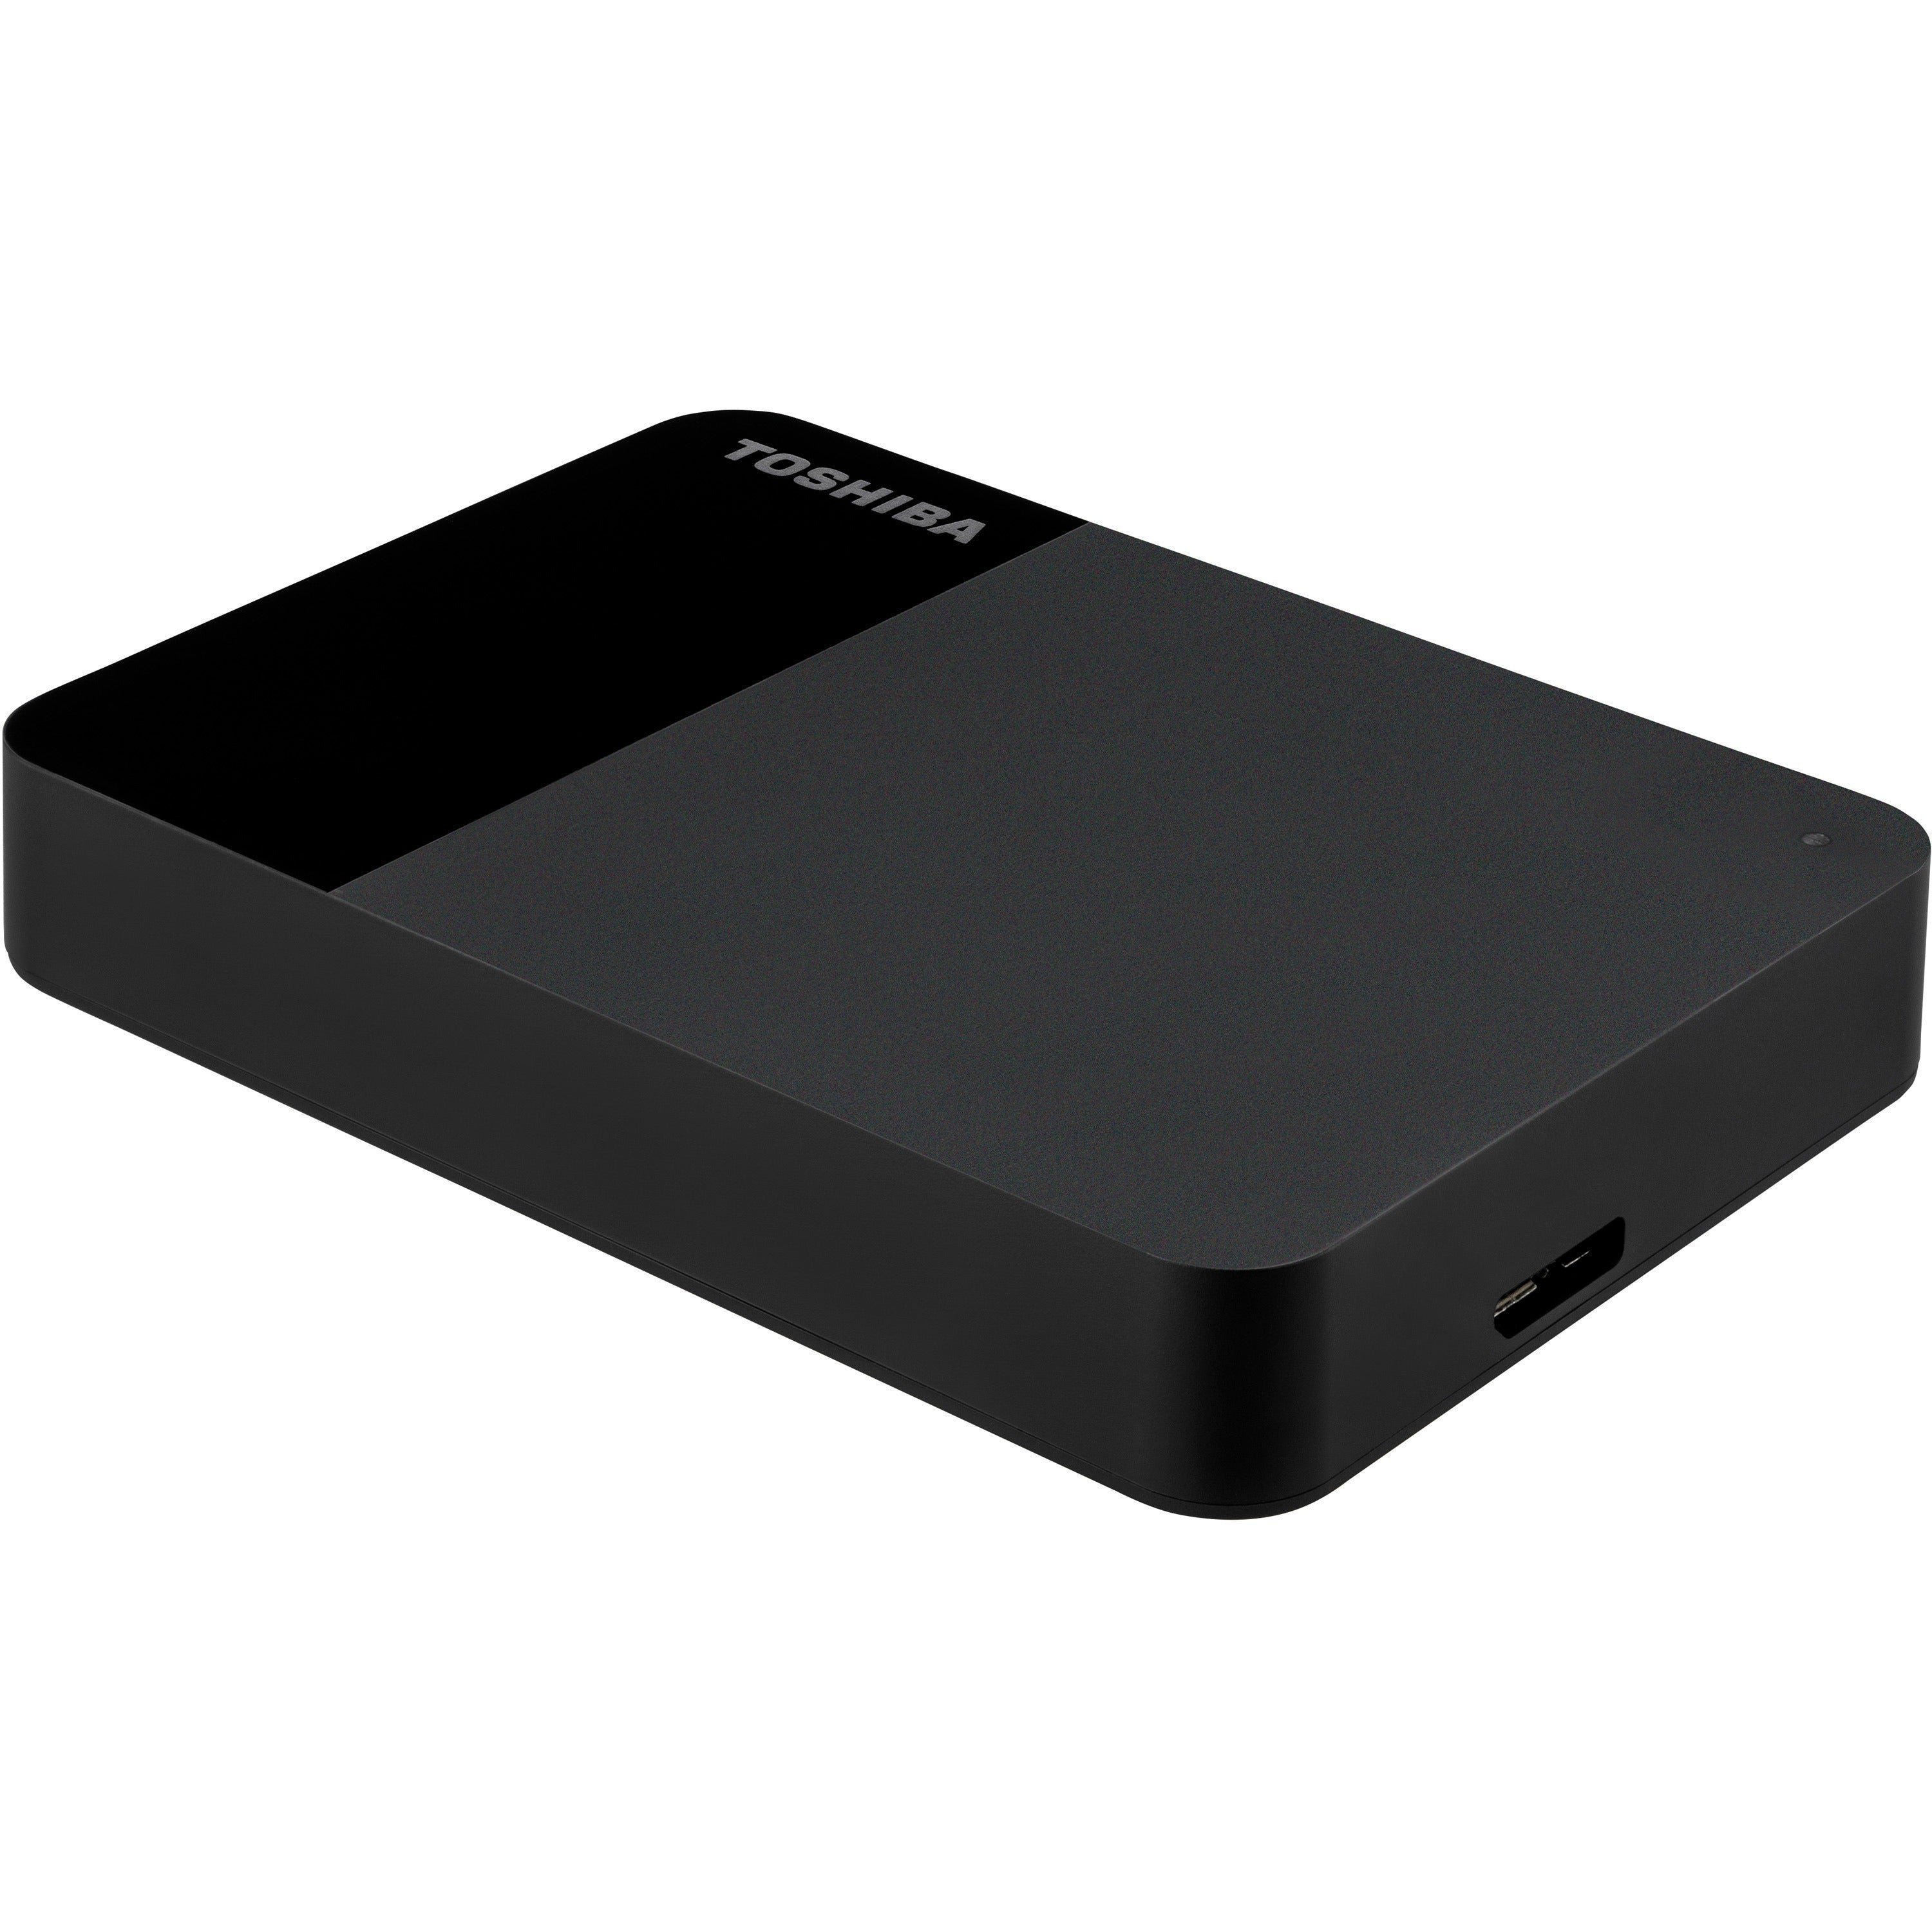 toshiba-canvio-ready-hdtp340xk3ca-4-tb-portable-hard-drive-external-black-desktop-pc-notebook-device-supported-usb-30-1-year-warranty-1-pack_toshdtp340xk3ca - 2